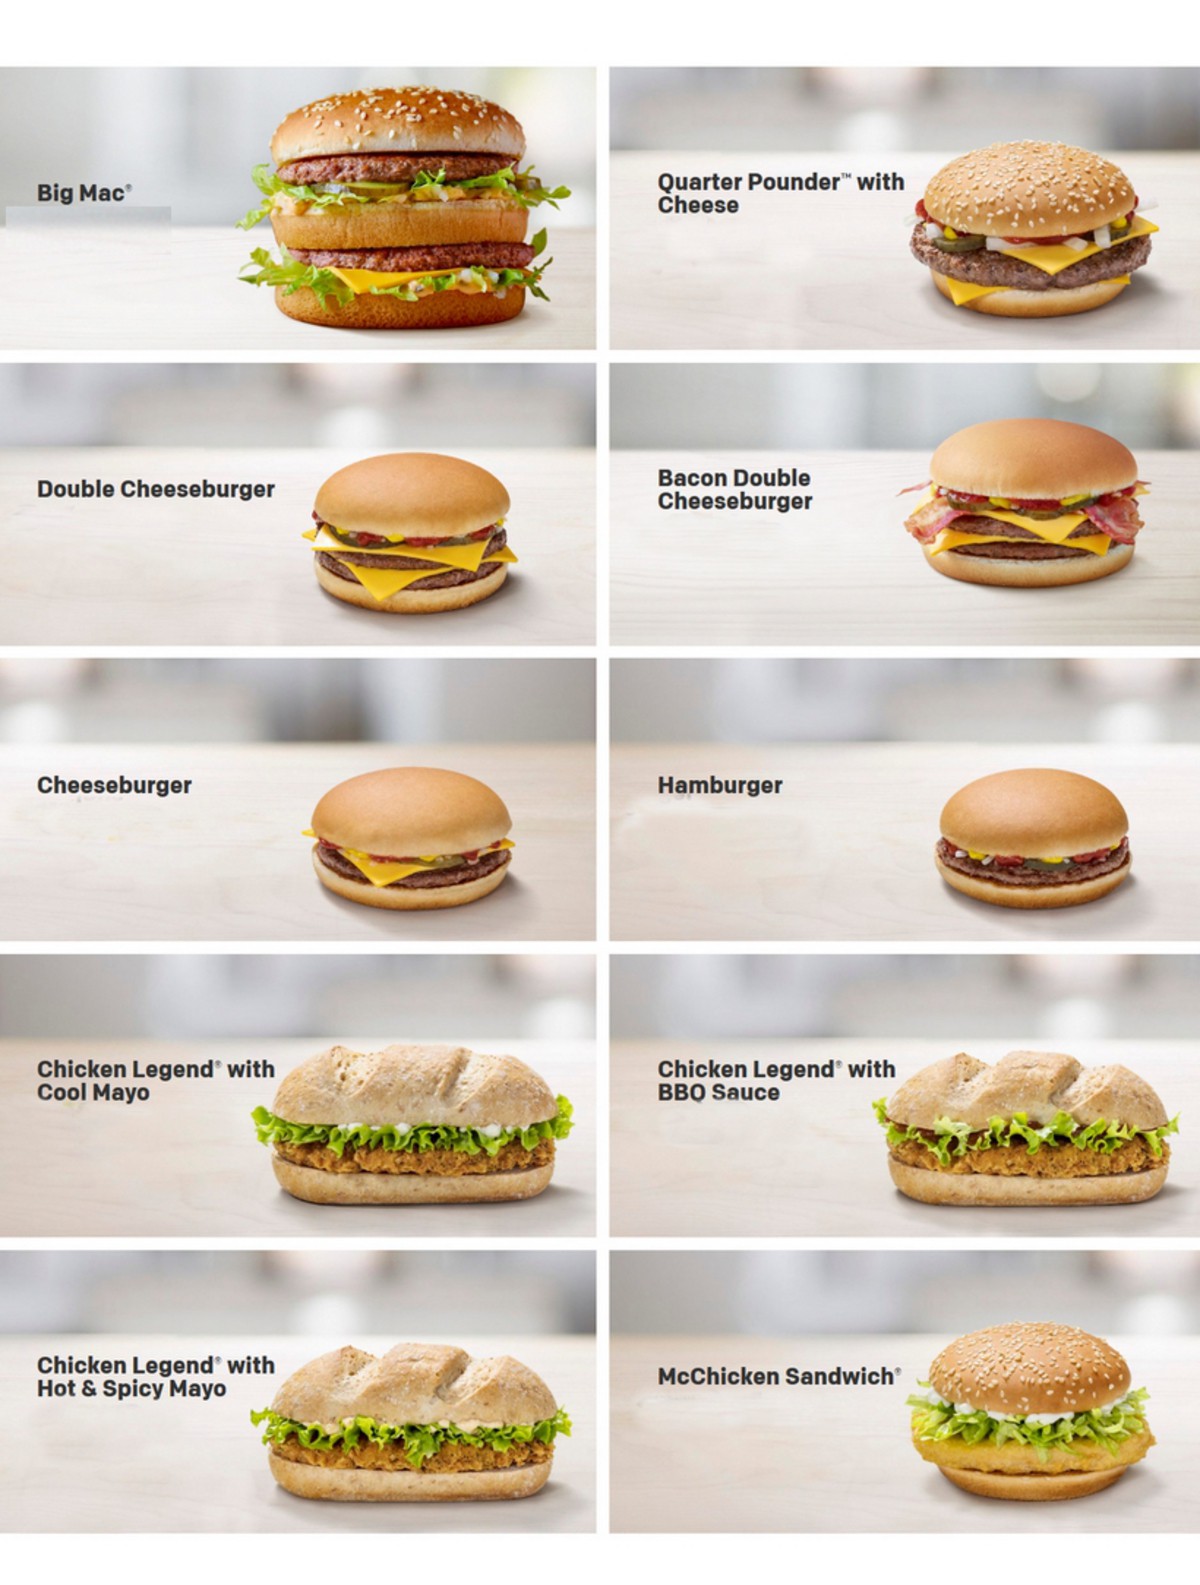 McDonald's Food Menu Prices